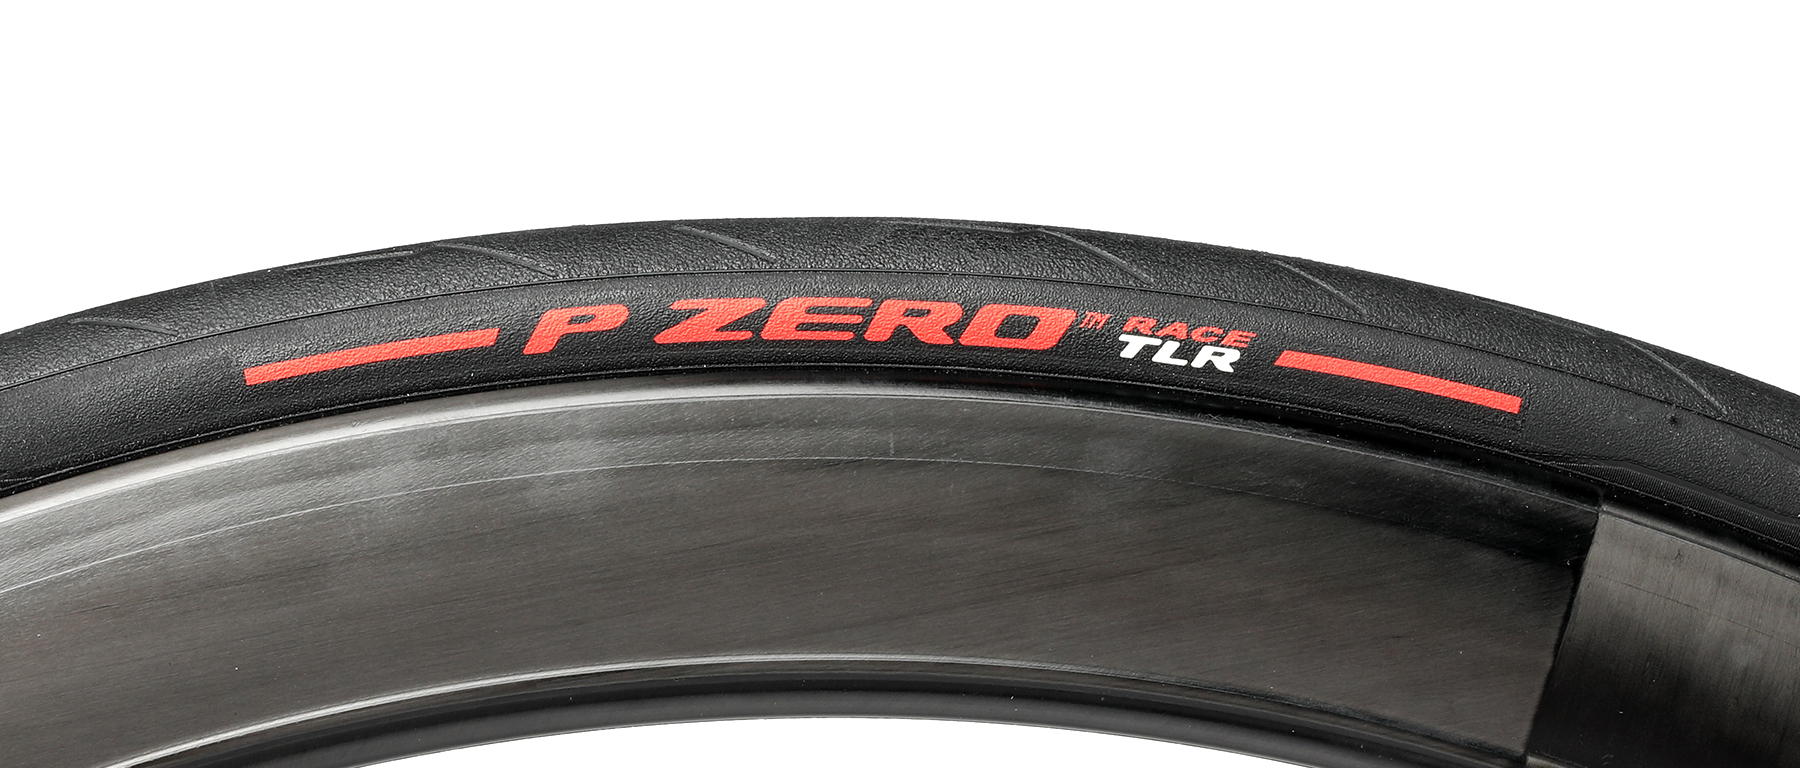 Pirelli P Zero Race TLR Tubeless Tire